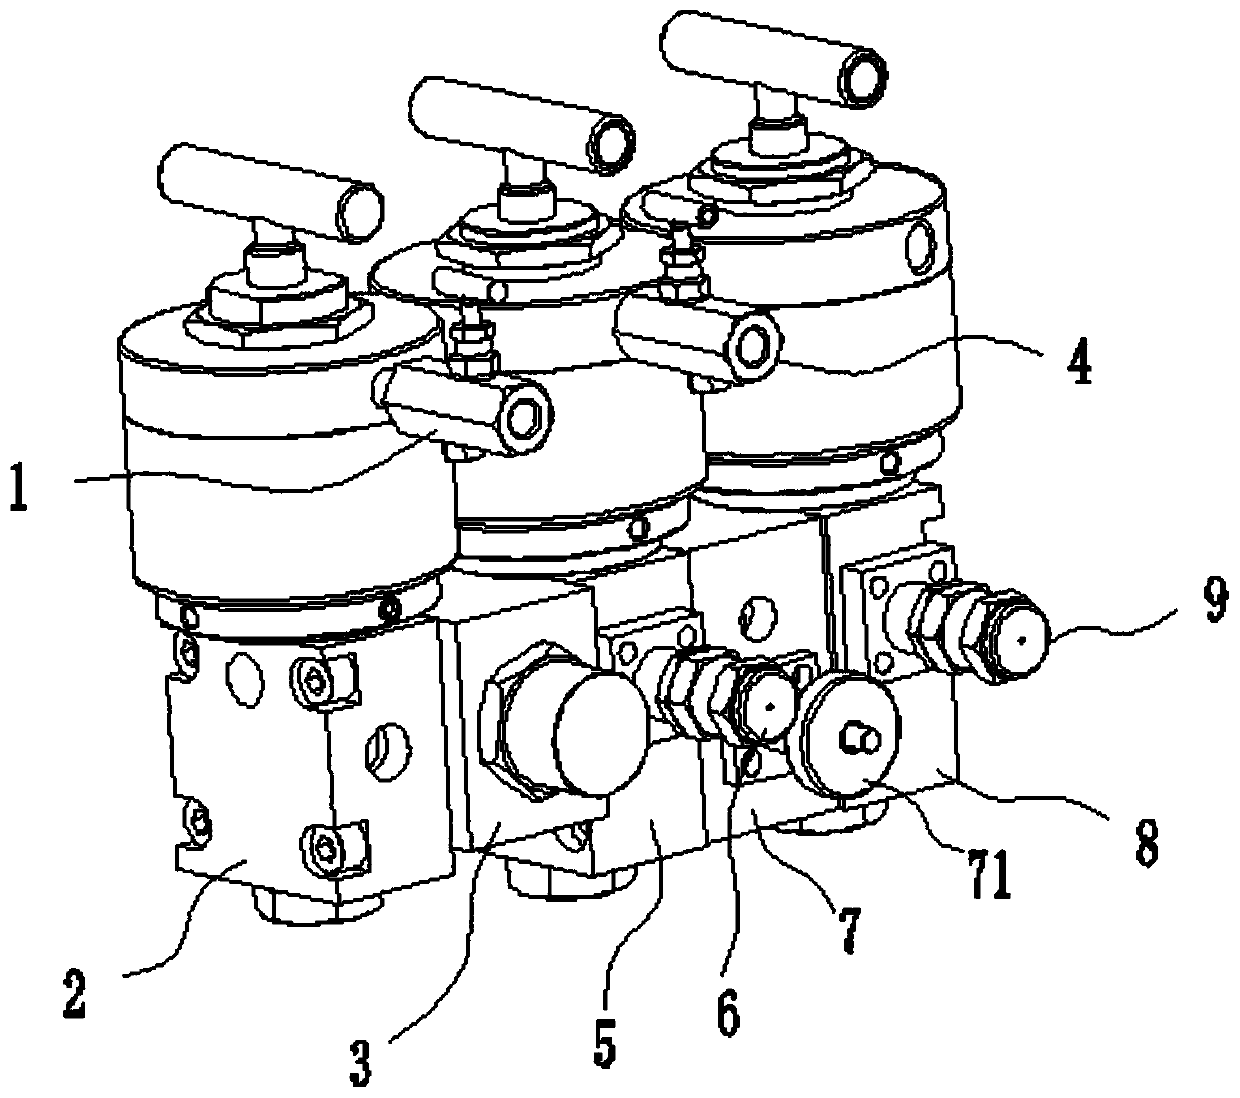 Wellhead safety three-valve control integrated module